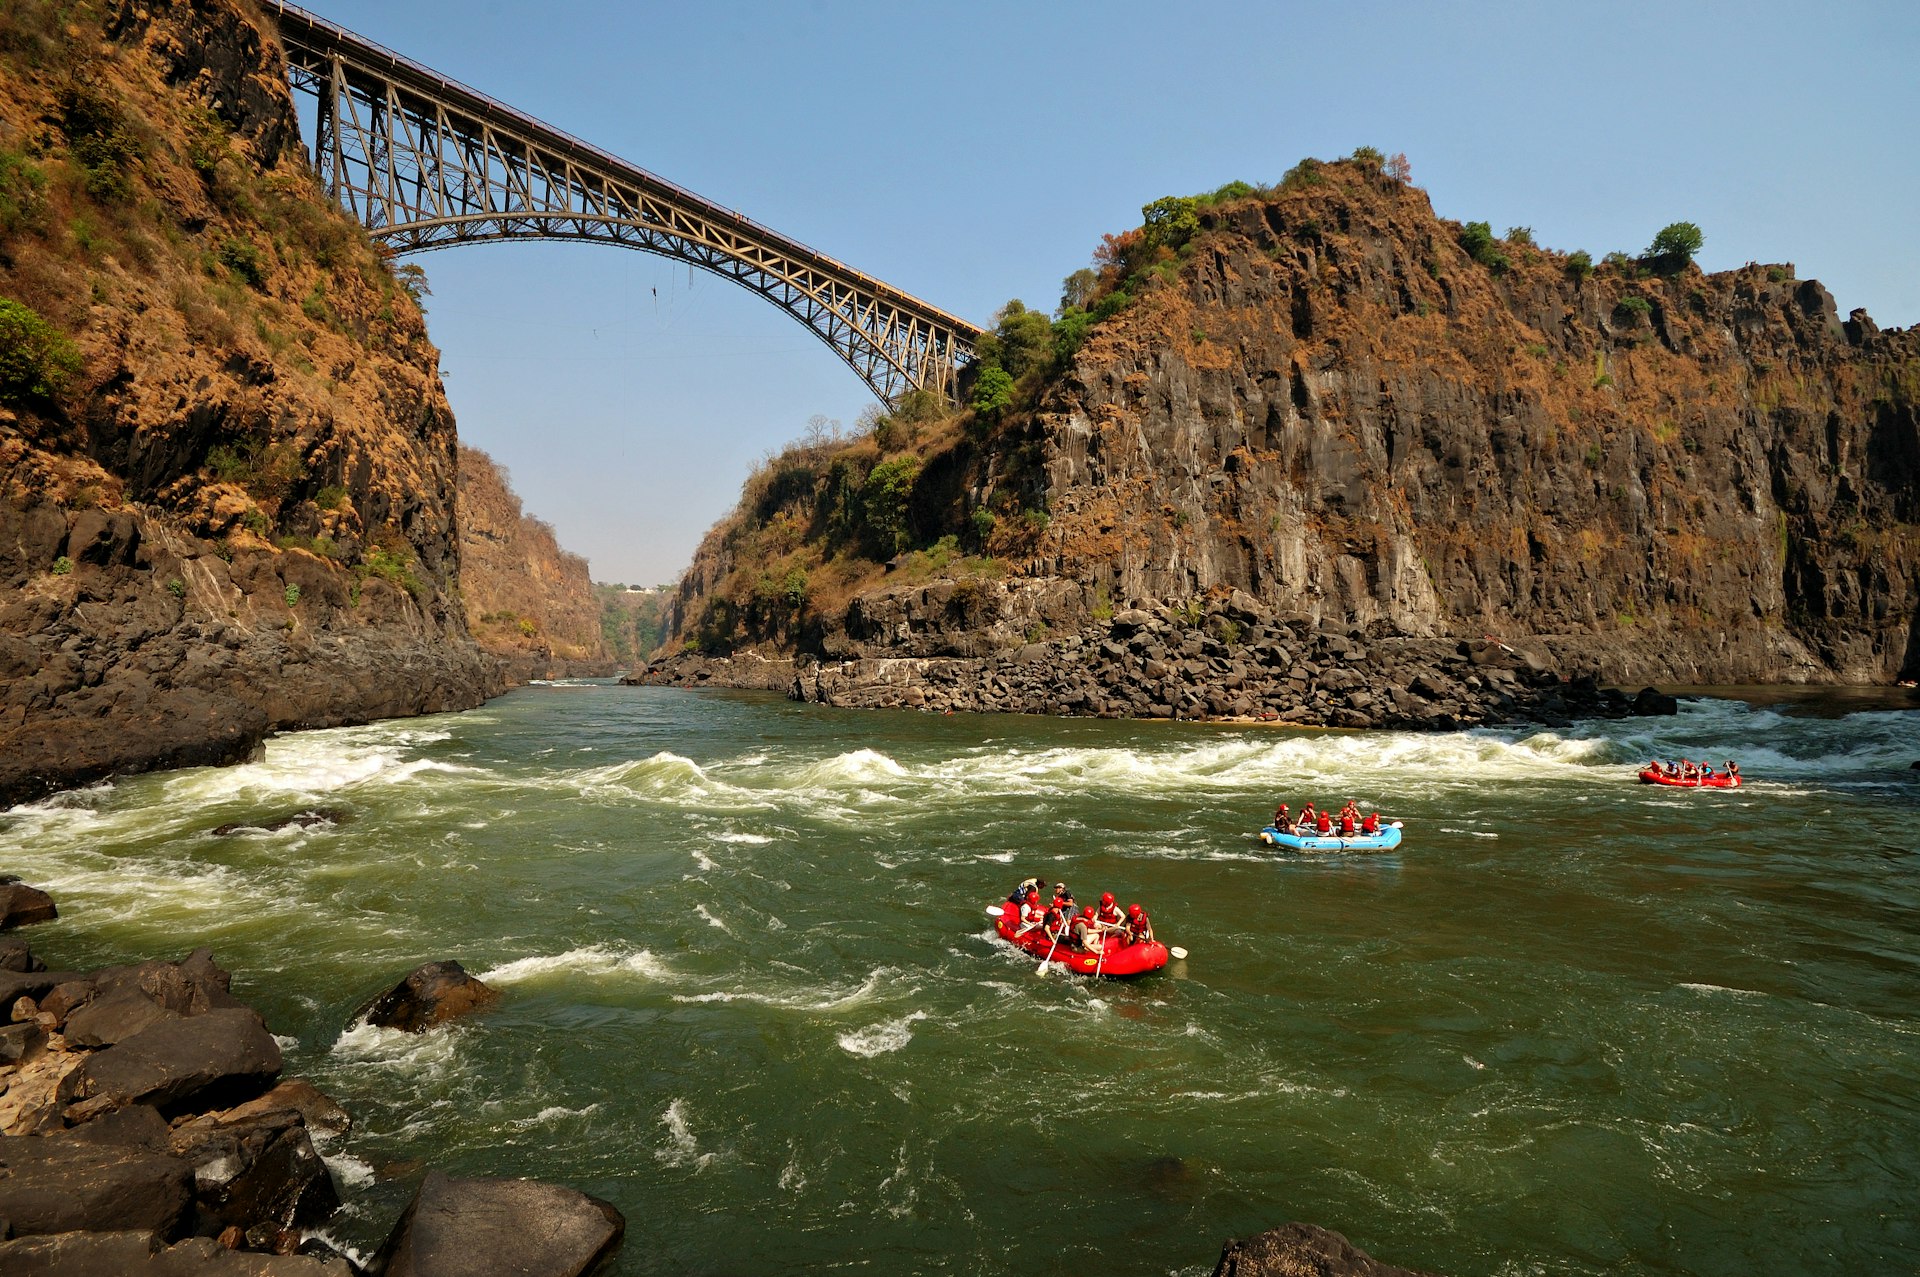 Rafters on the Zambezi River near Victoria Falls Bridge